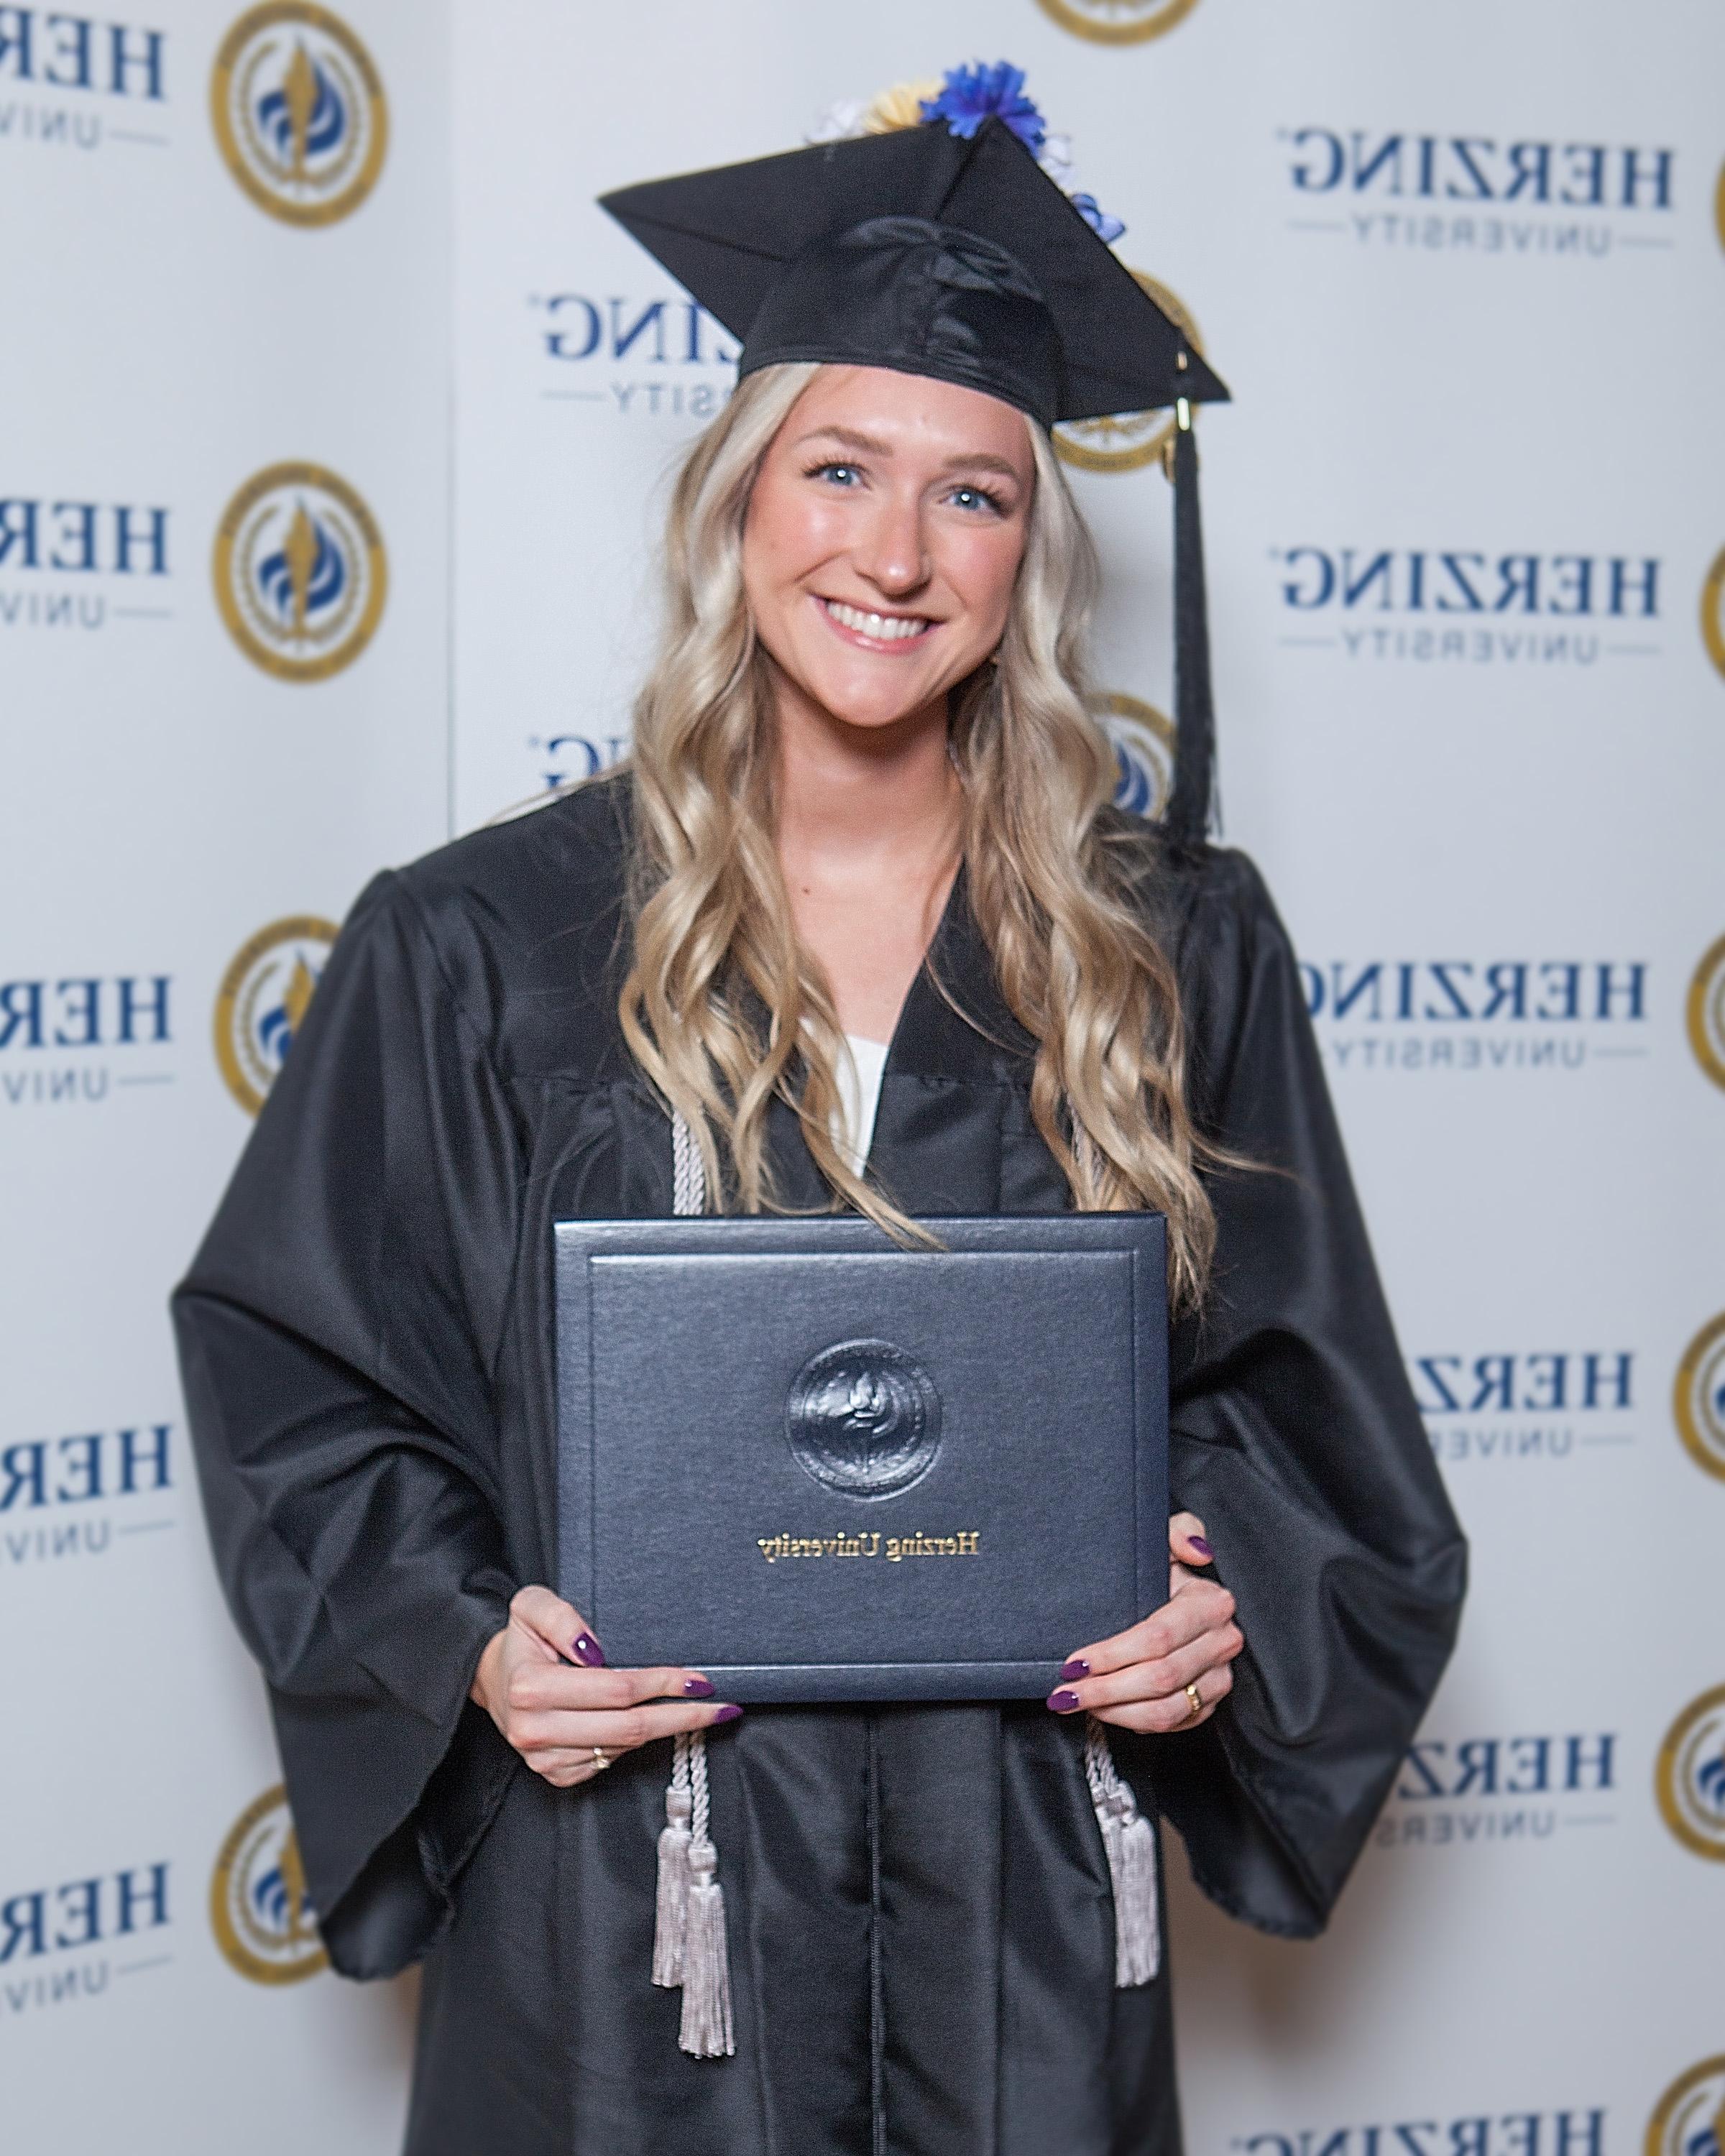 Herzing graduate smiling 和 holding degree